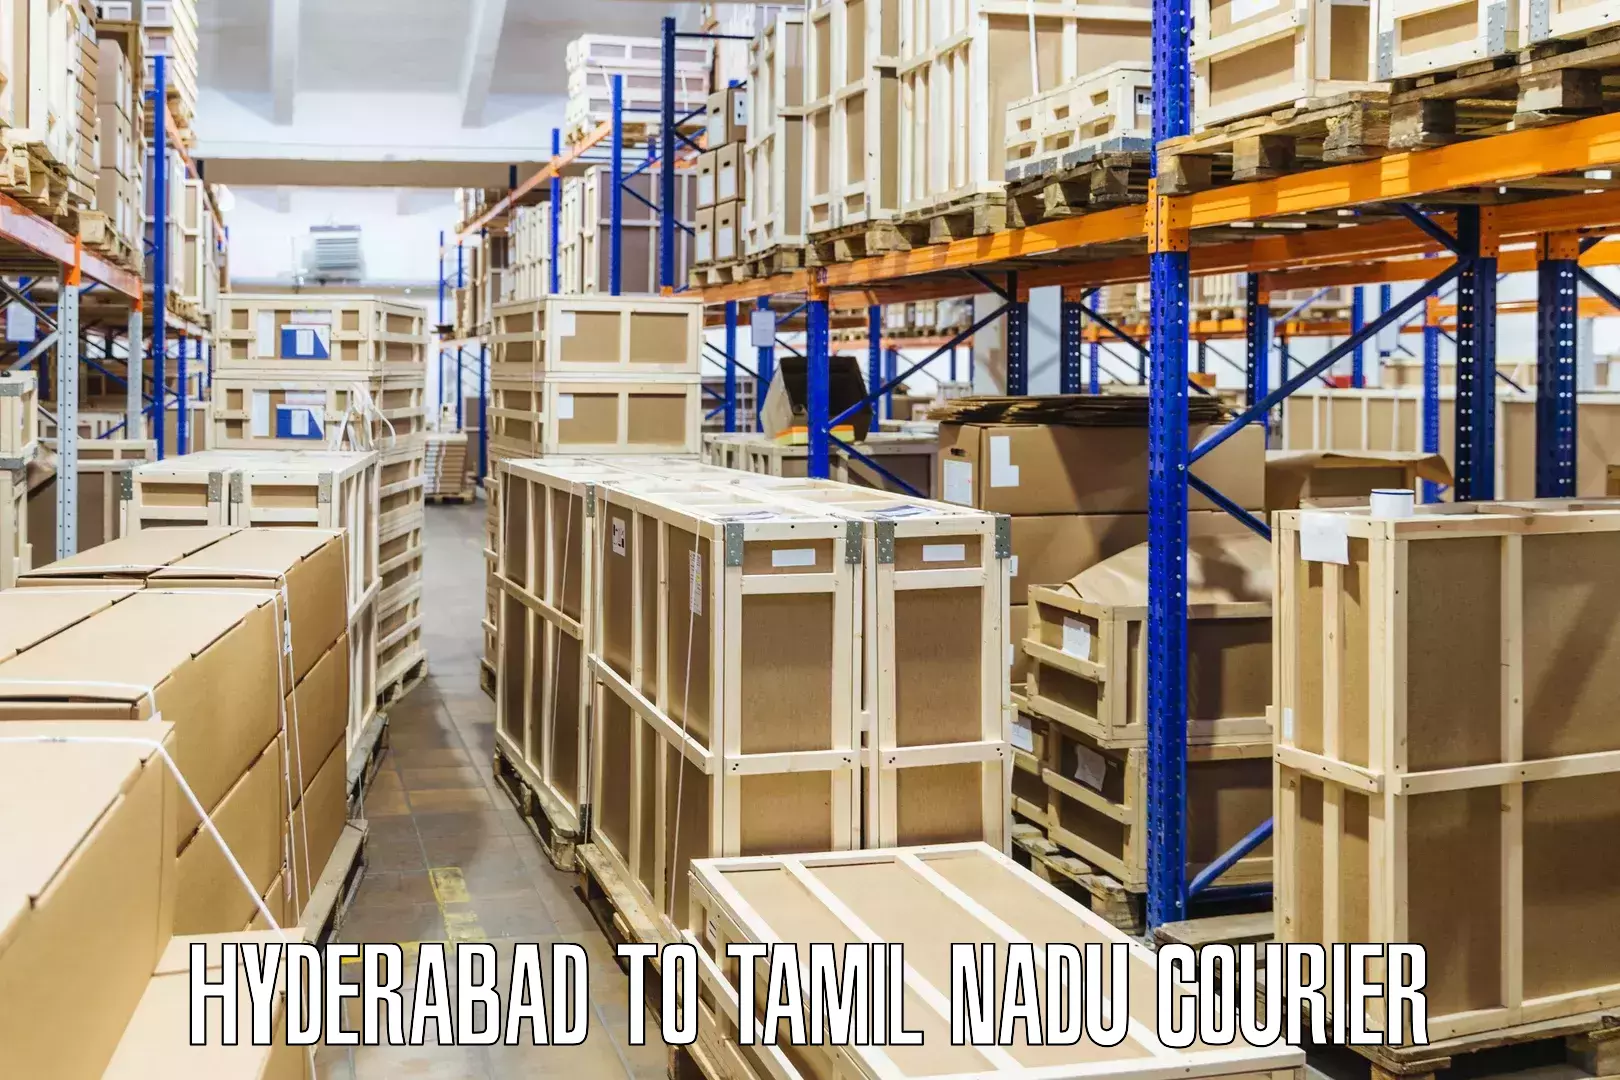 Package delivery network Hyderabad to Nanguneri